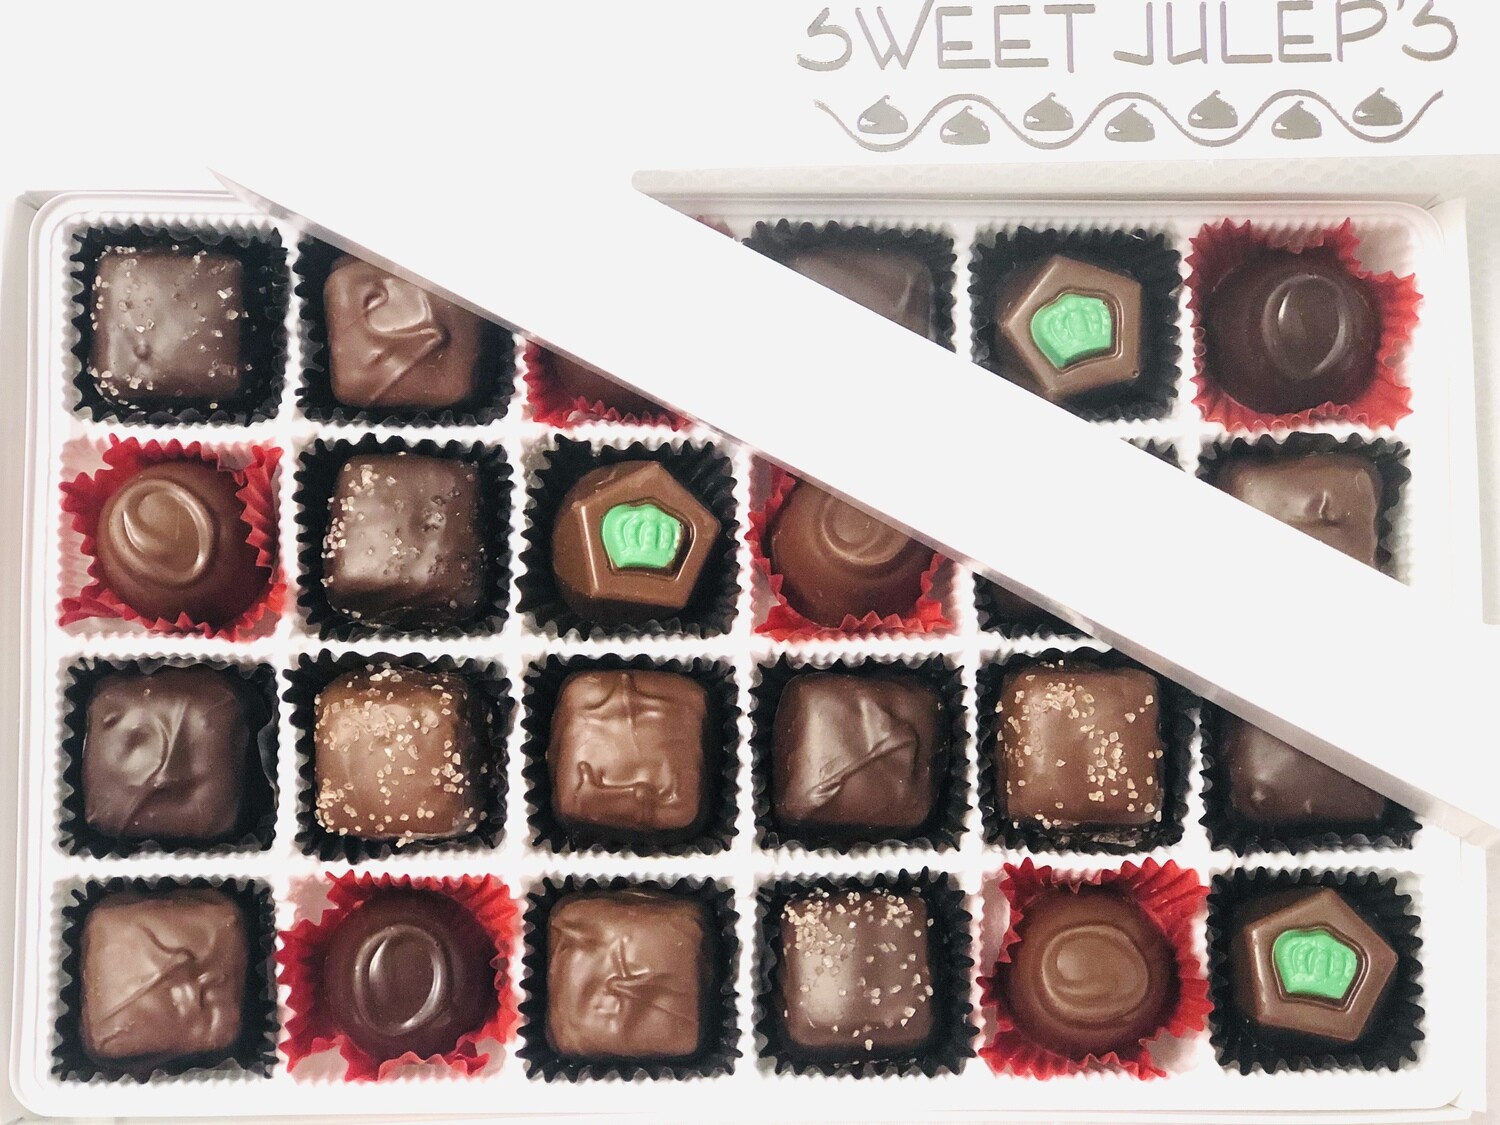 SUGAR FREE - 24 Piece Box of Assorted Chocolates